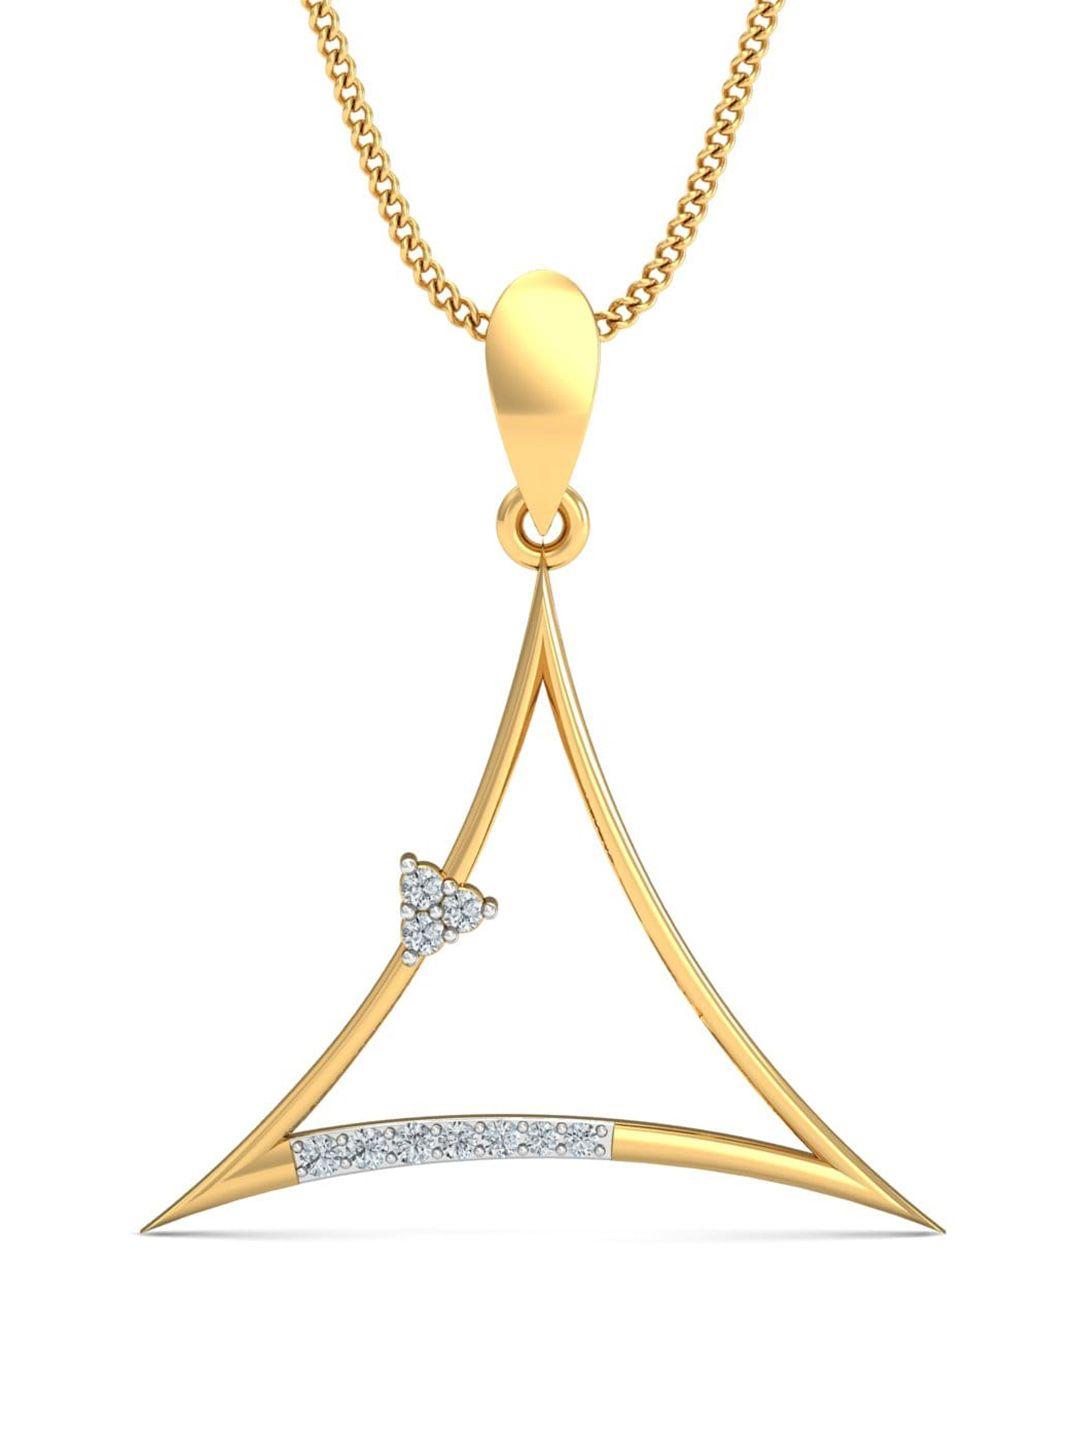 kuberbox 18kt gold diamond studded dise pendant- 0.99 gm